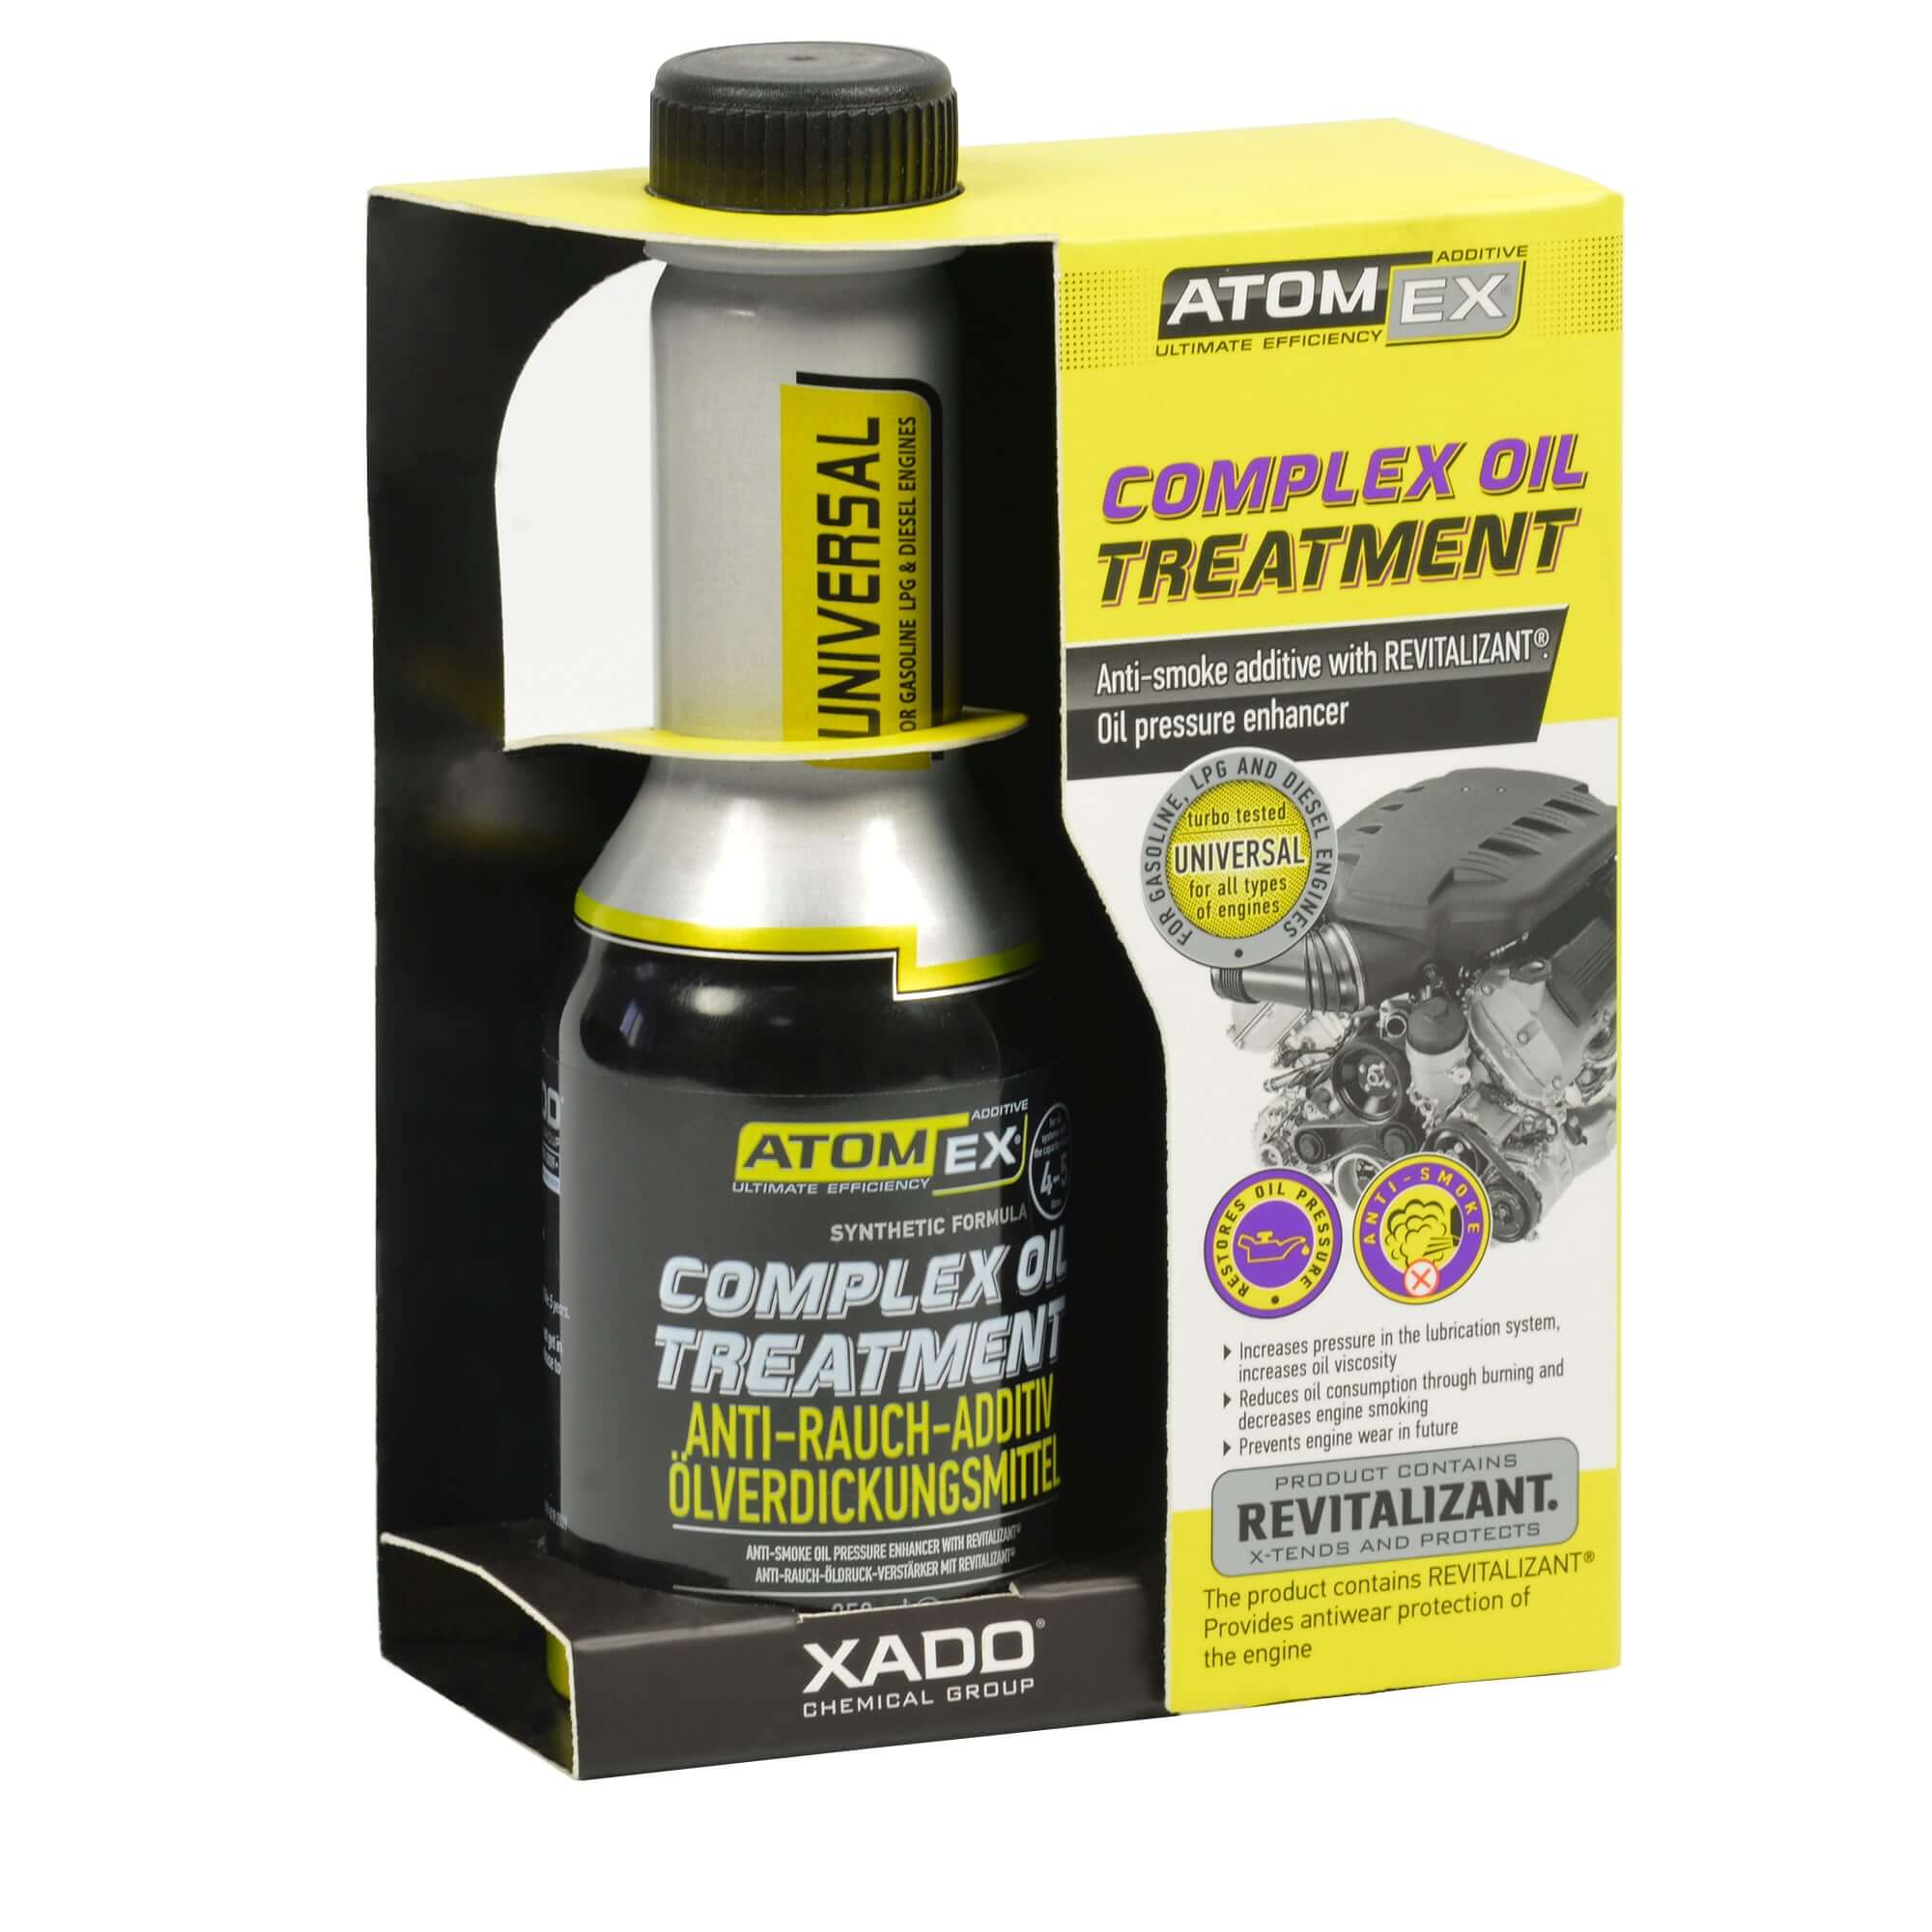 Atomex Complex Oil Treatment - Antismoke Additive with XADO